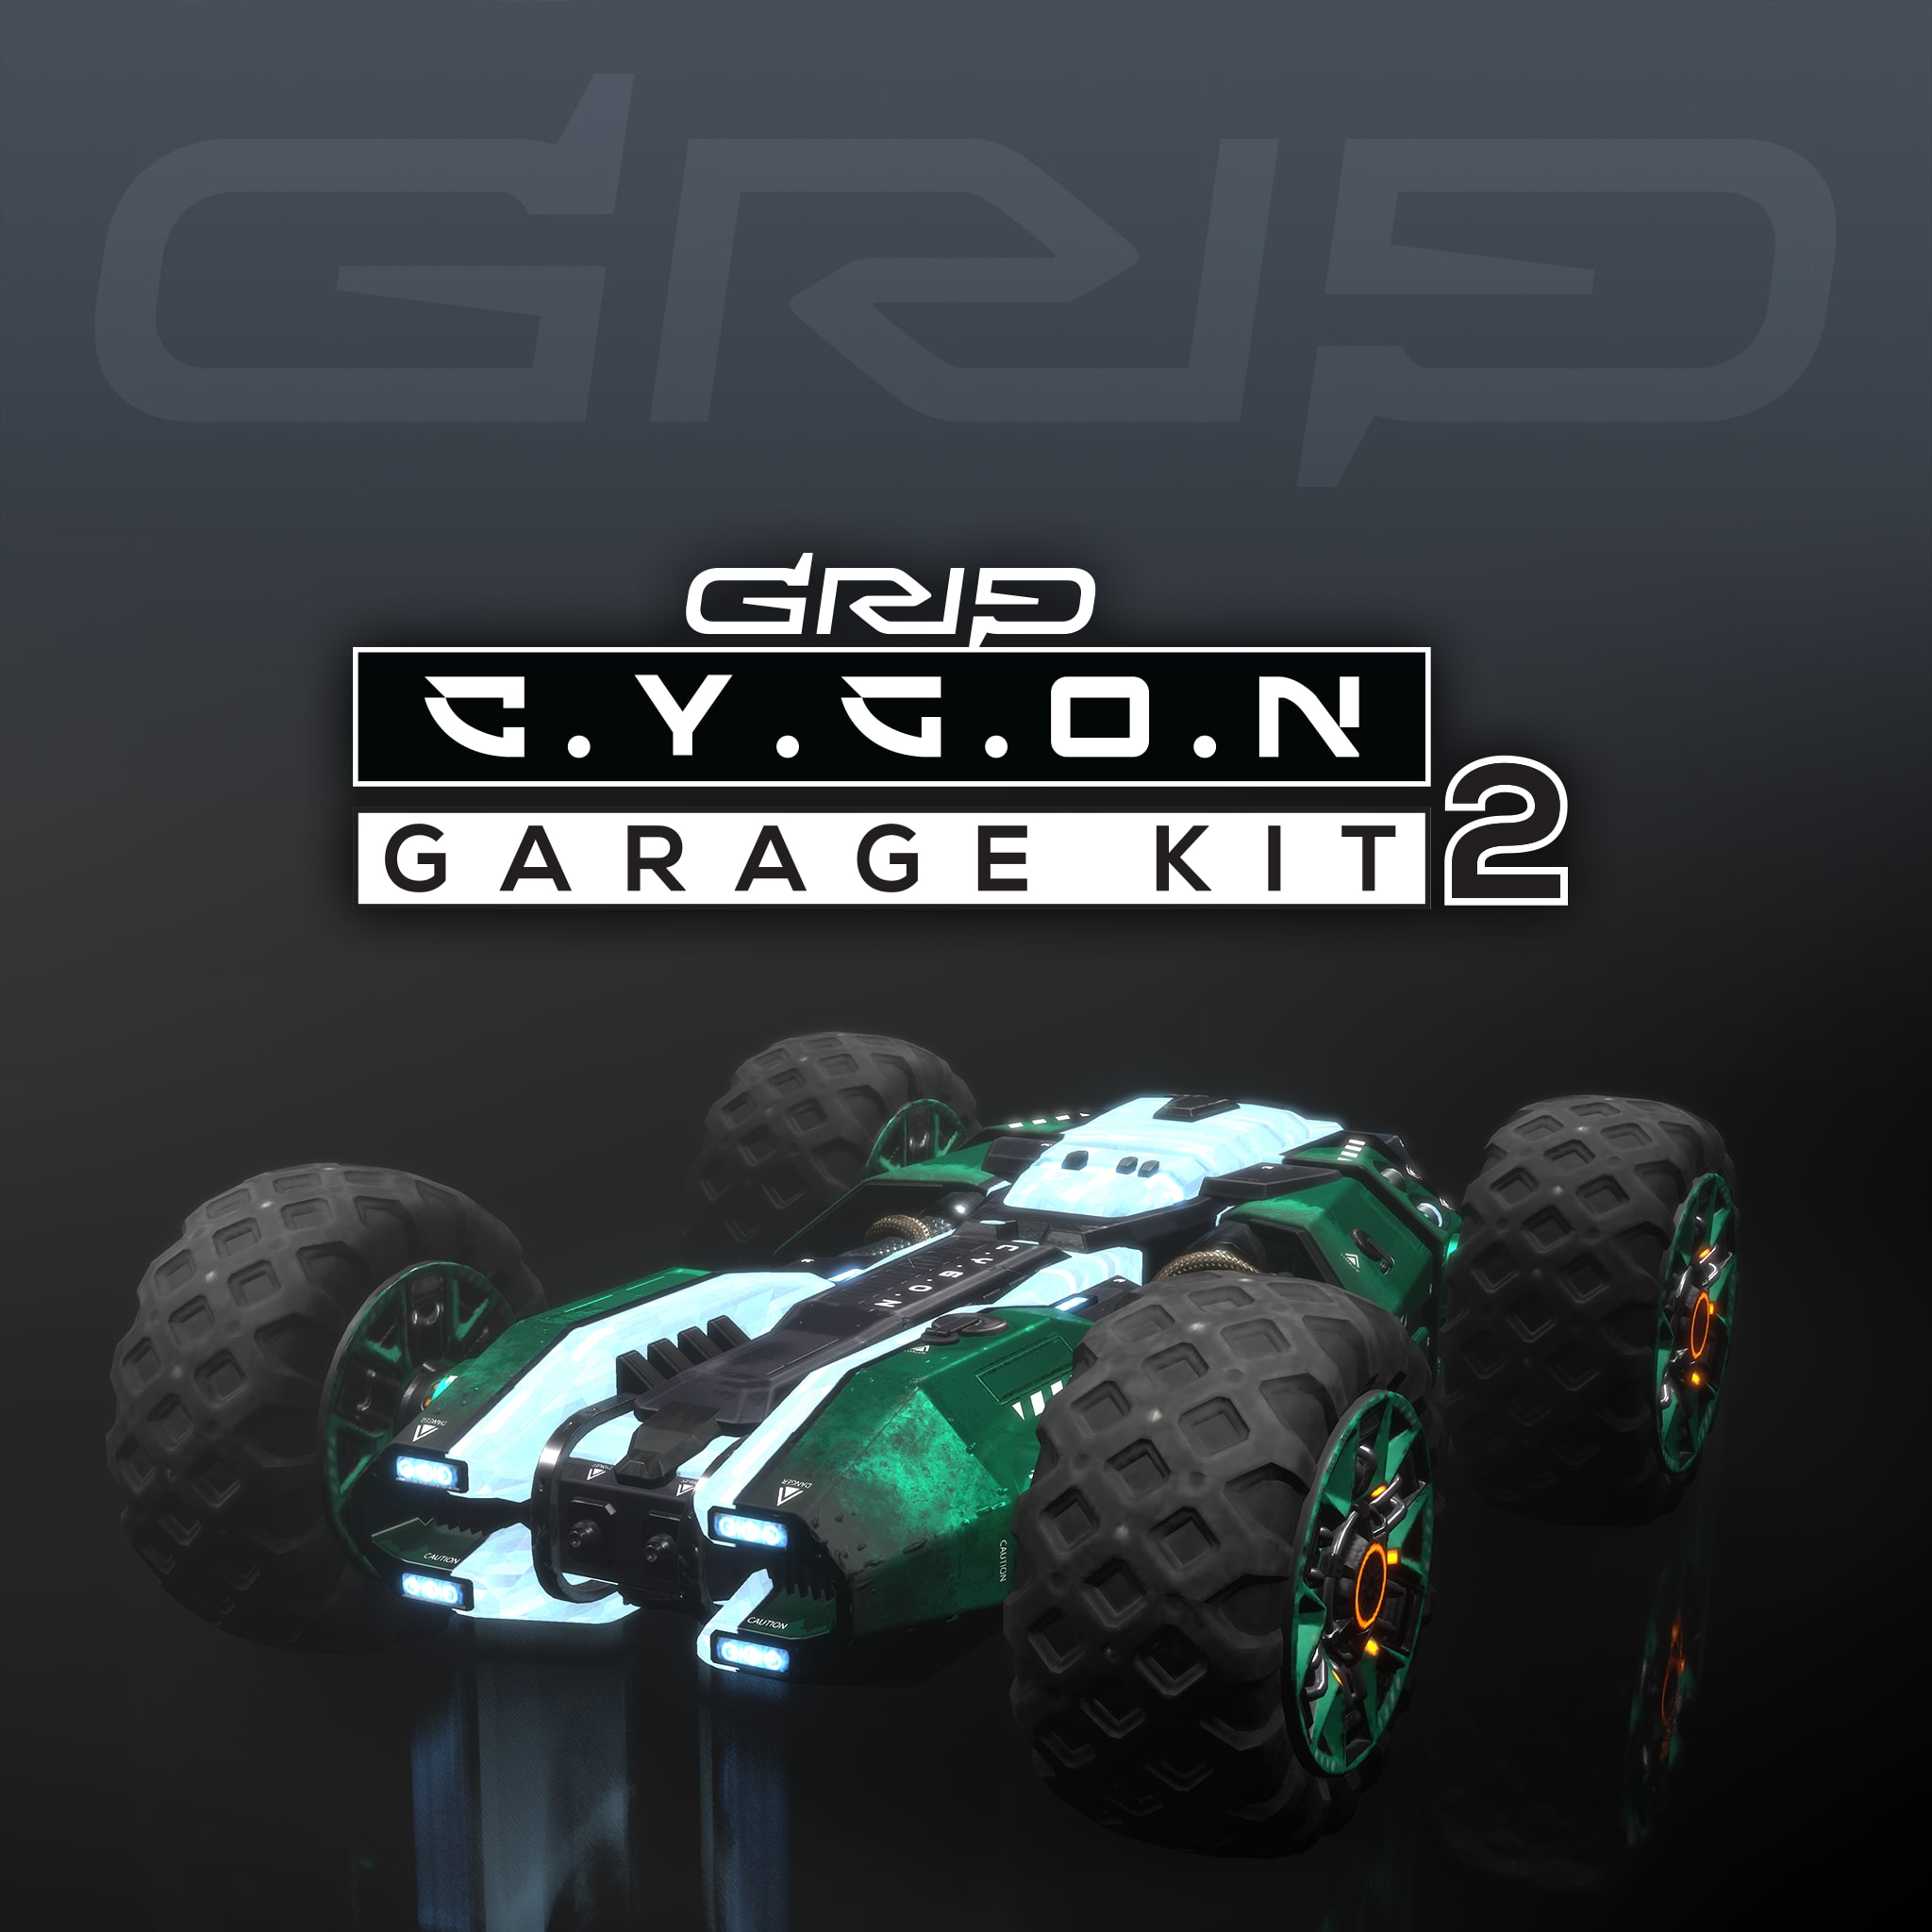 GRIP: Cygon Garage Kit 2